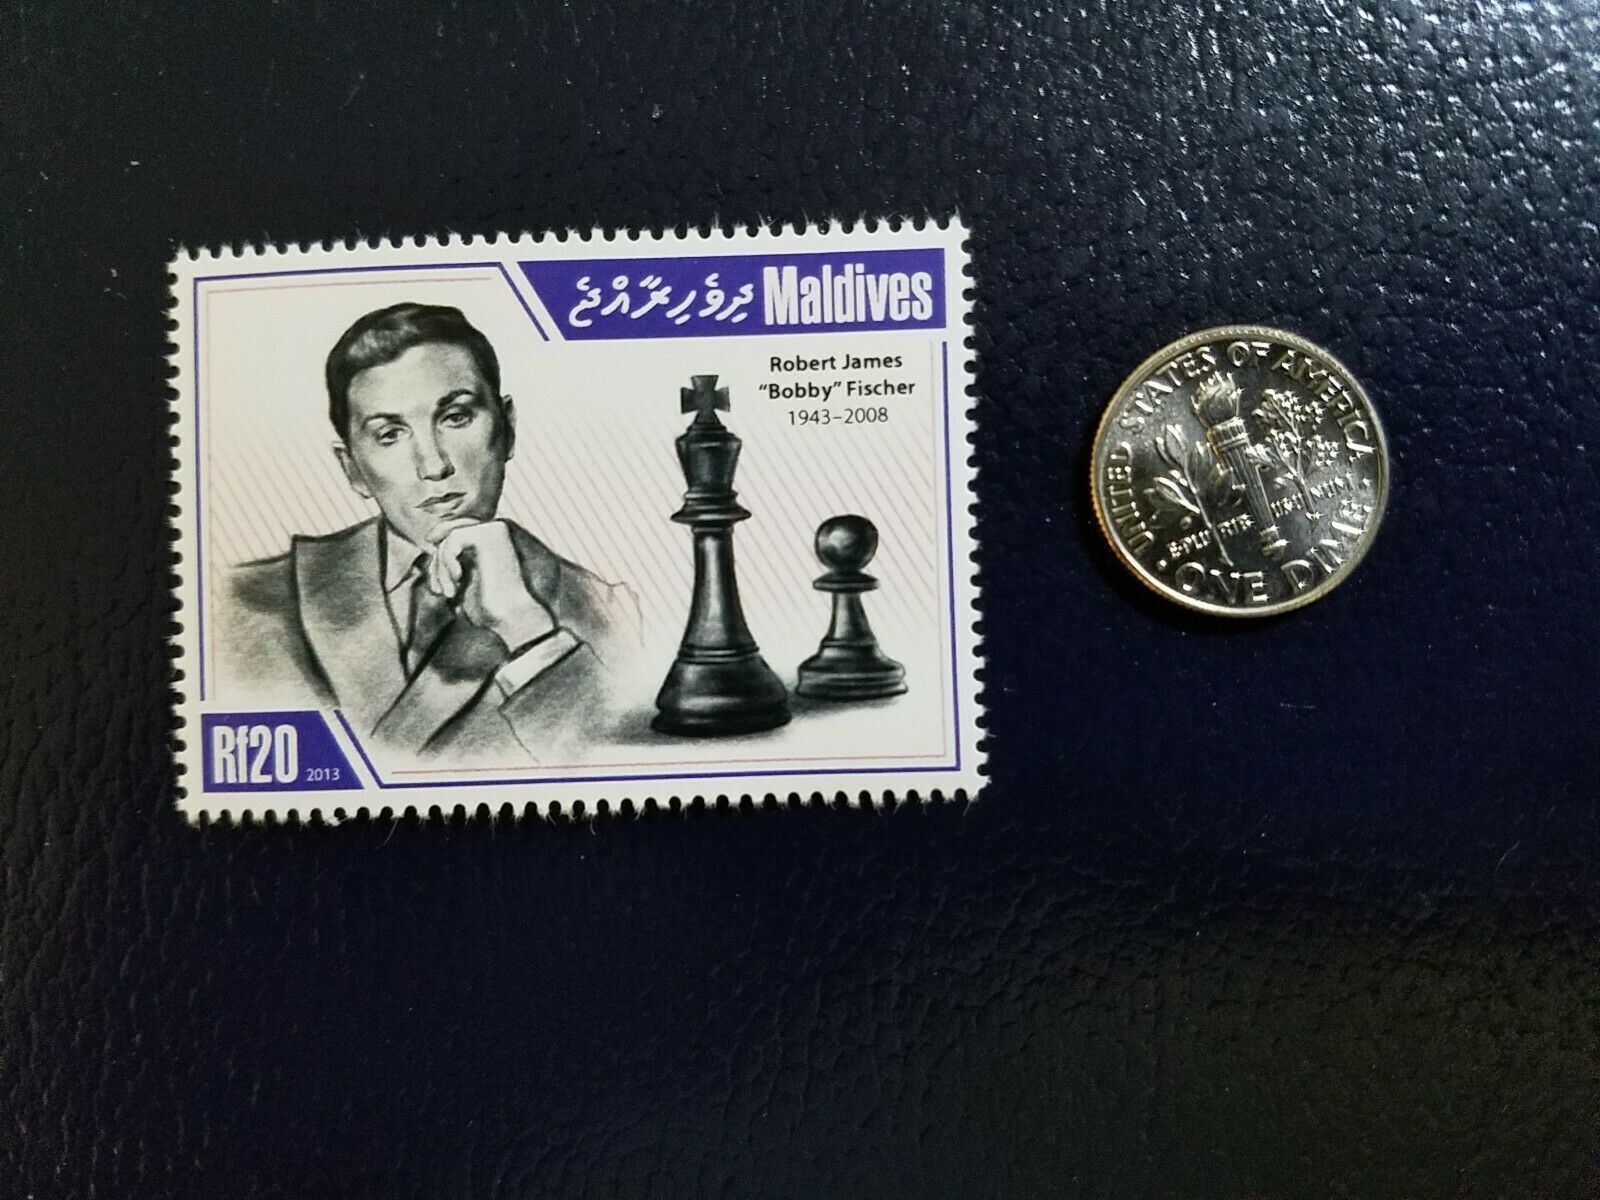 Bobby Fischer Grandmaster Chess Champion 2013 Maldives Perforated Stamp (d)